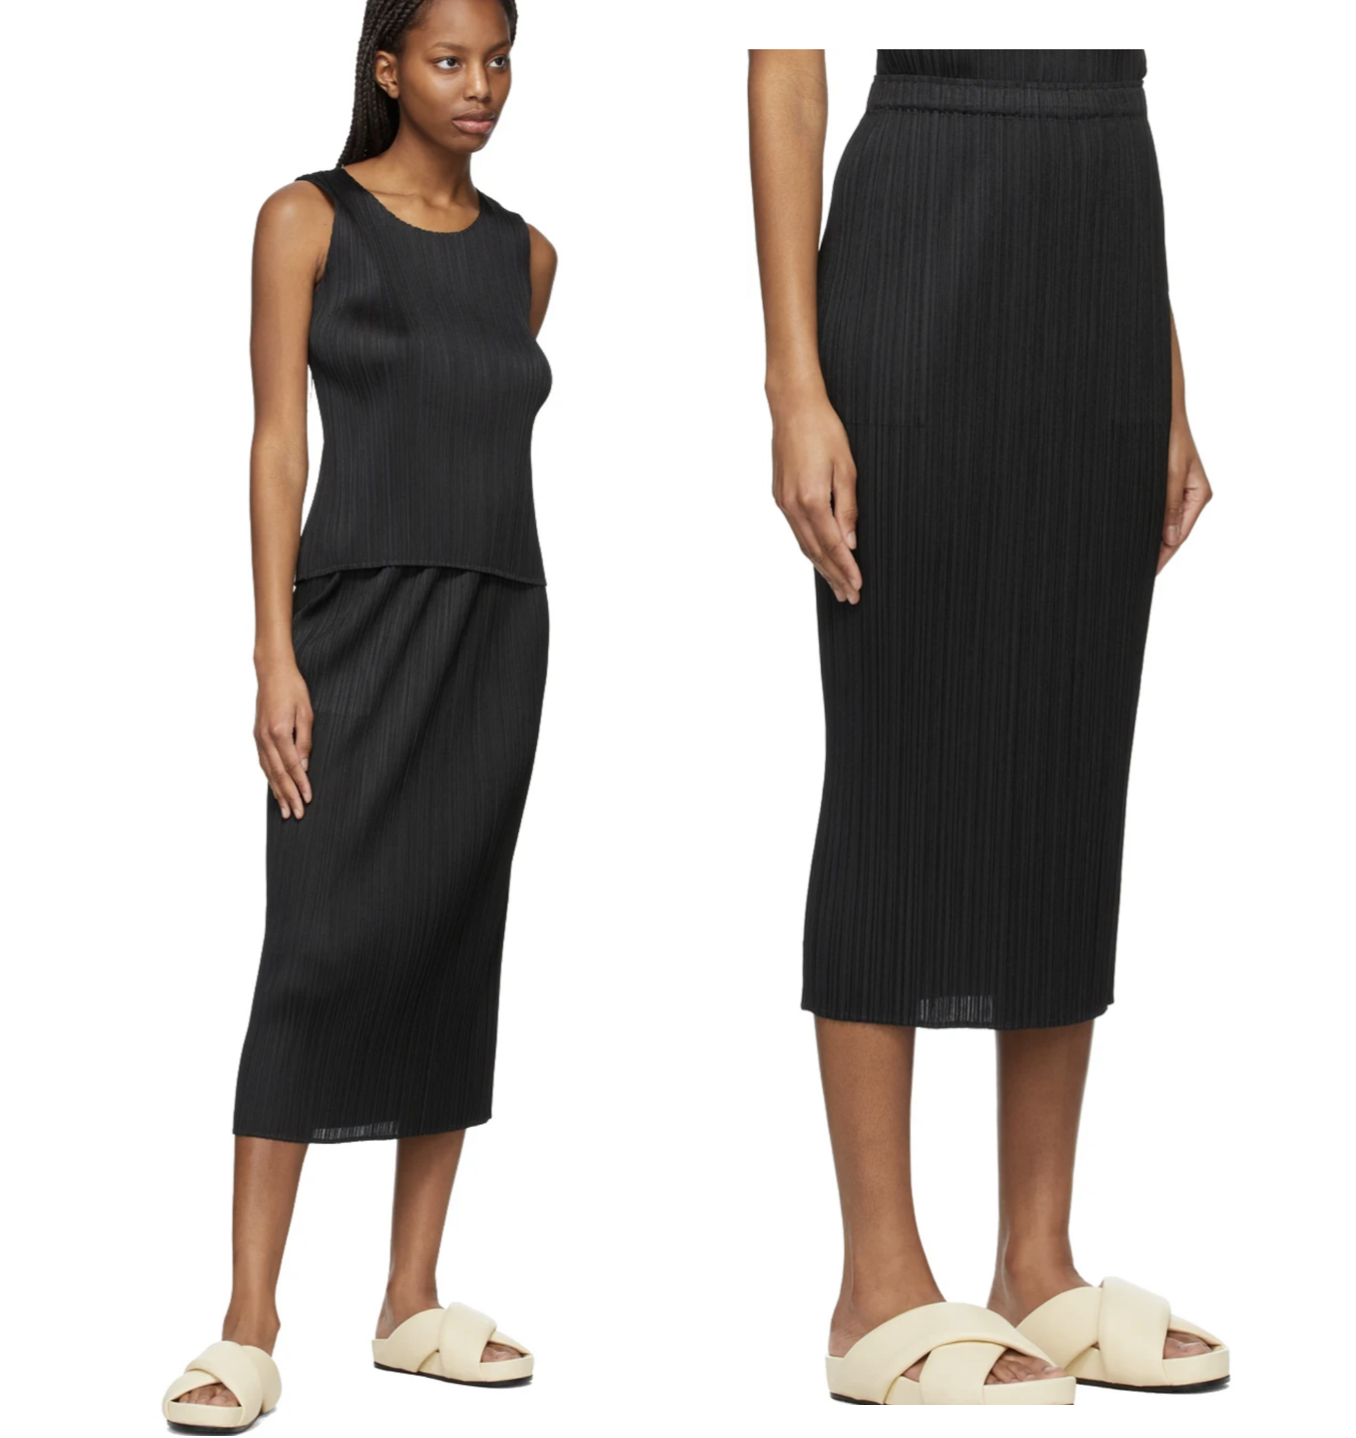 Check styling ideas for「Mame Kurogouchi AIRism Cotton Open Back Bra  Camisole、Mame Kurogouchi AIRism Cotton Slit Skirt」